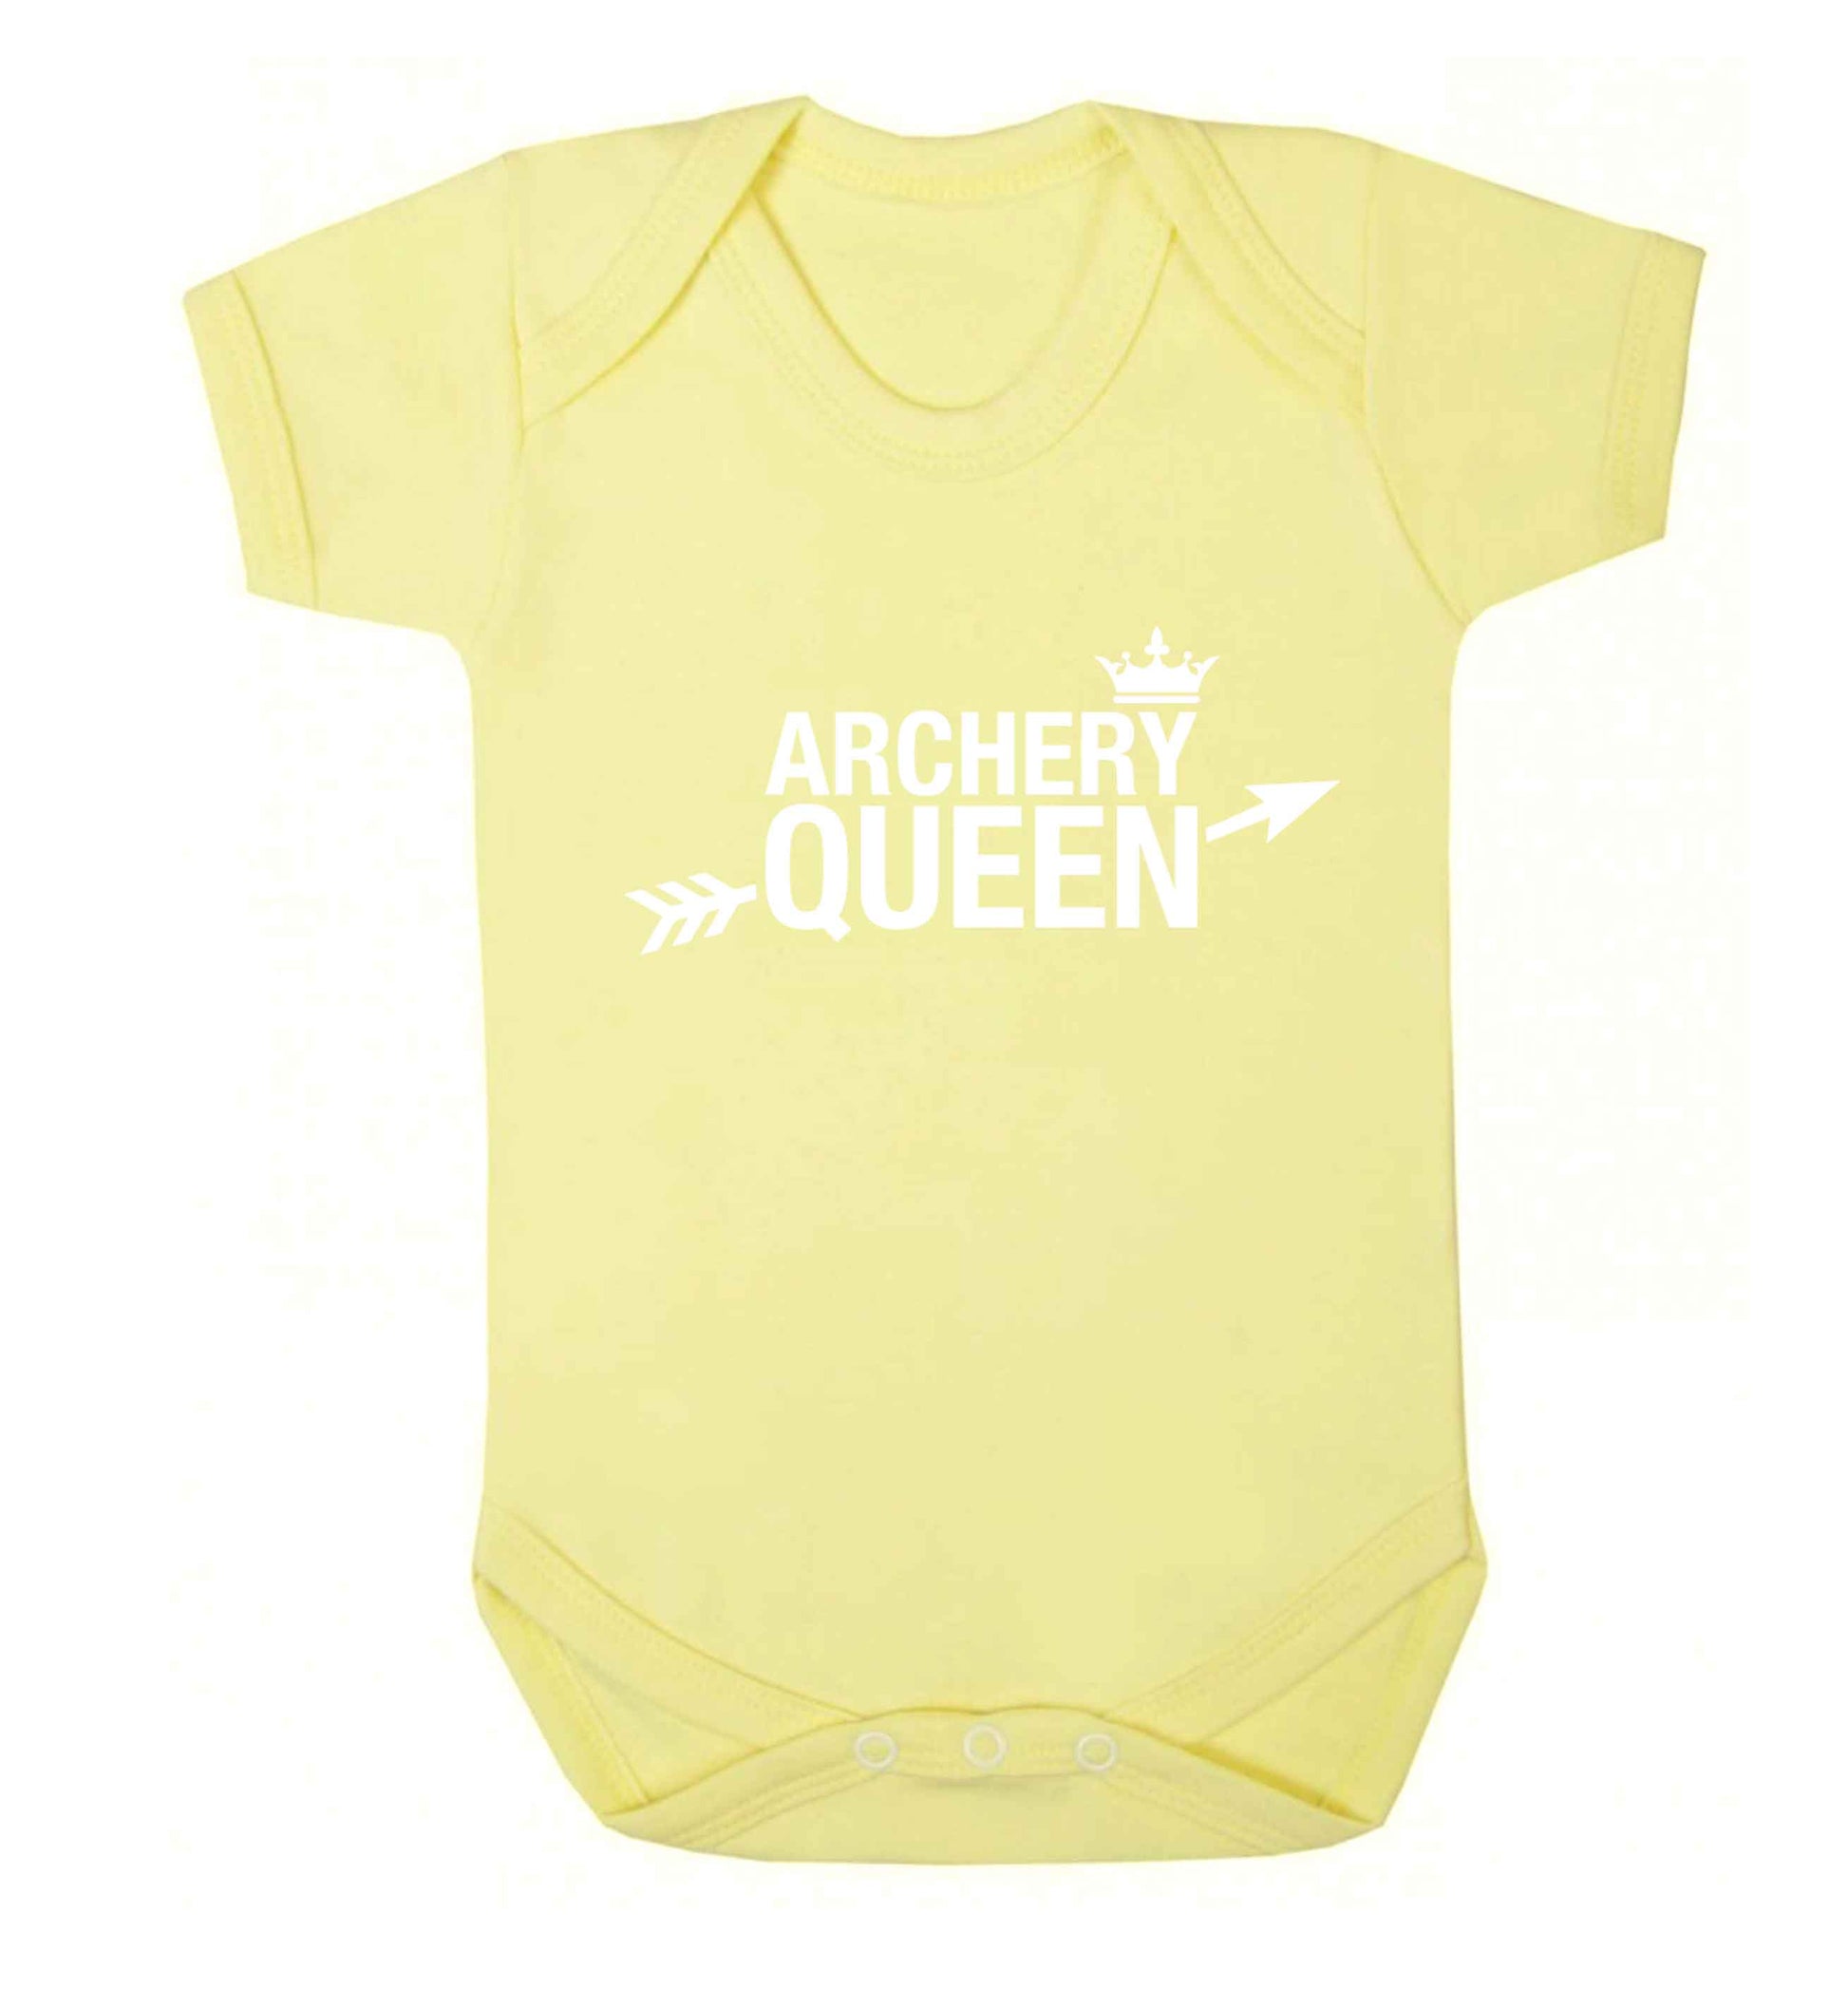 Archery queen Baby Vest pale yellow 18-24 months